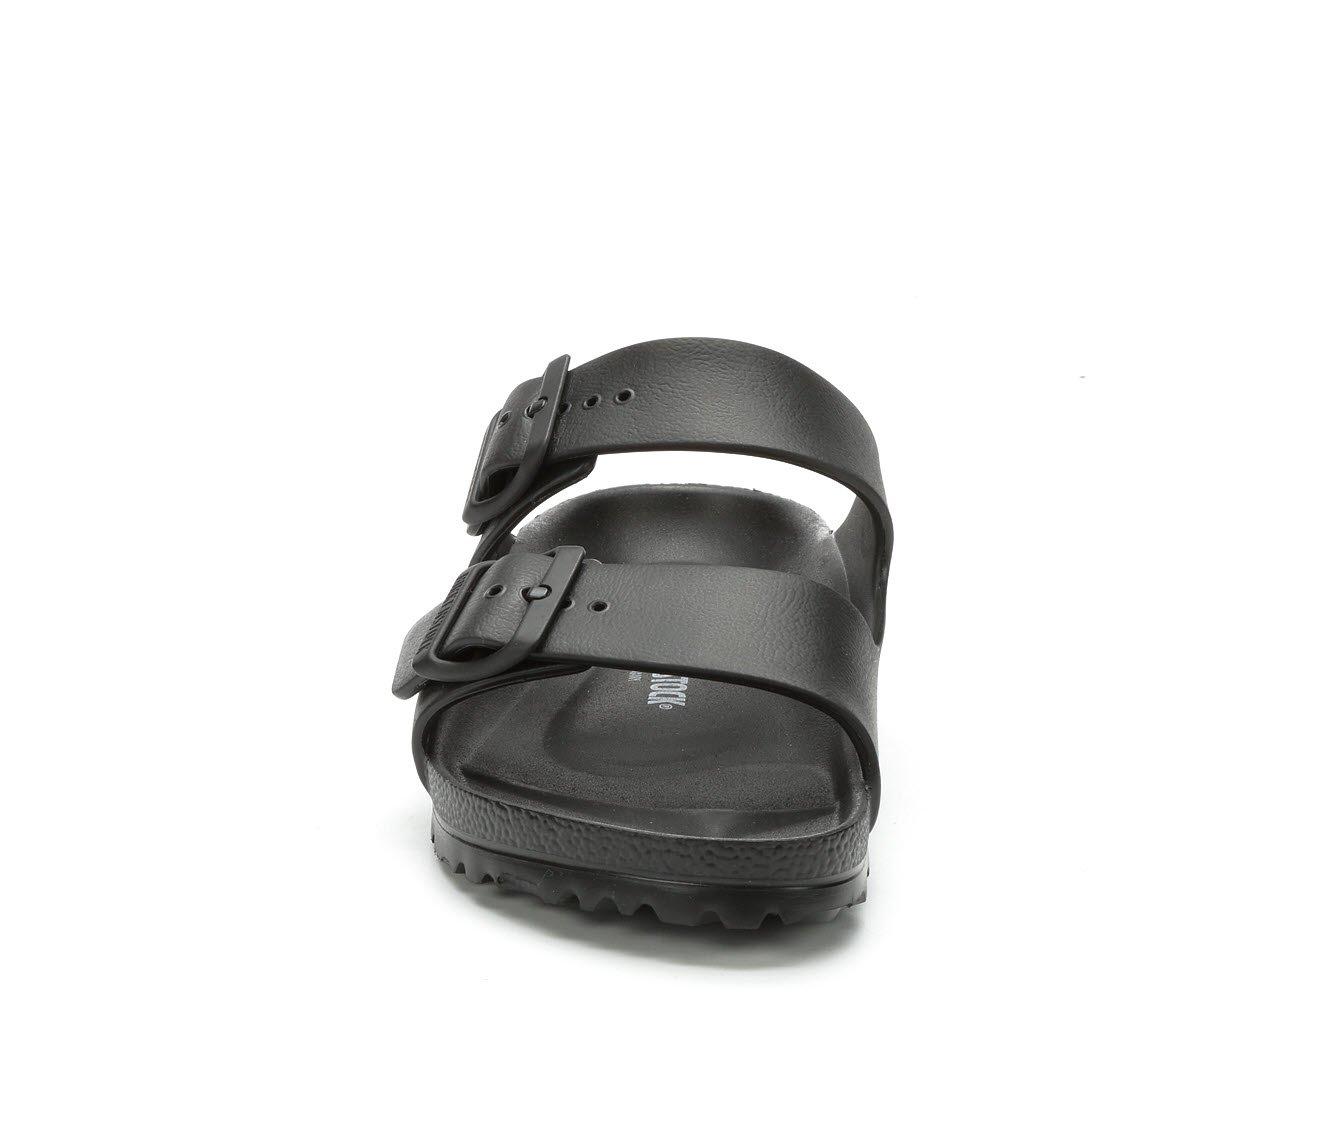 Y's BIRKENSTOCK Leather Sandals Black US About 6.5